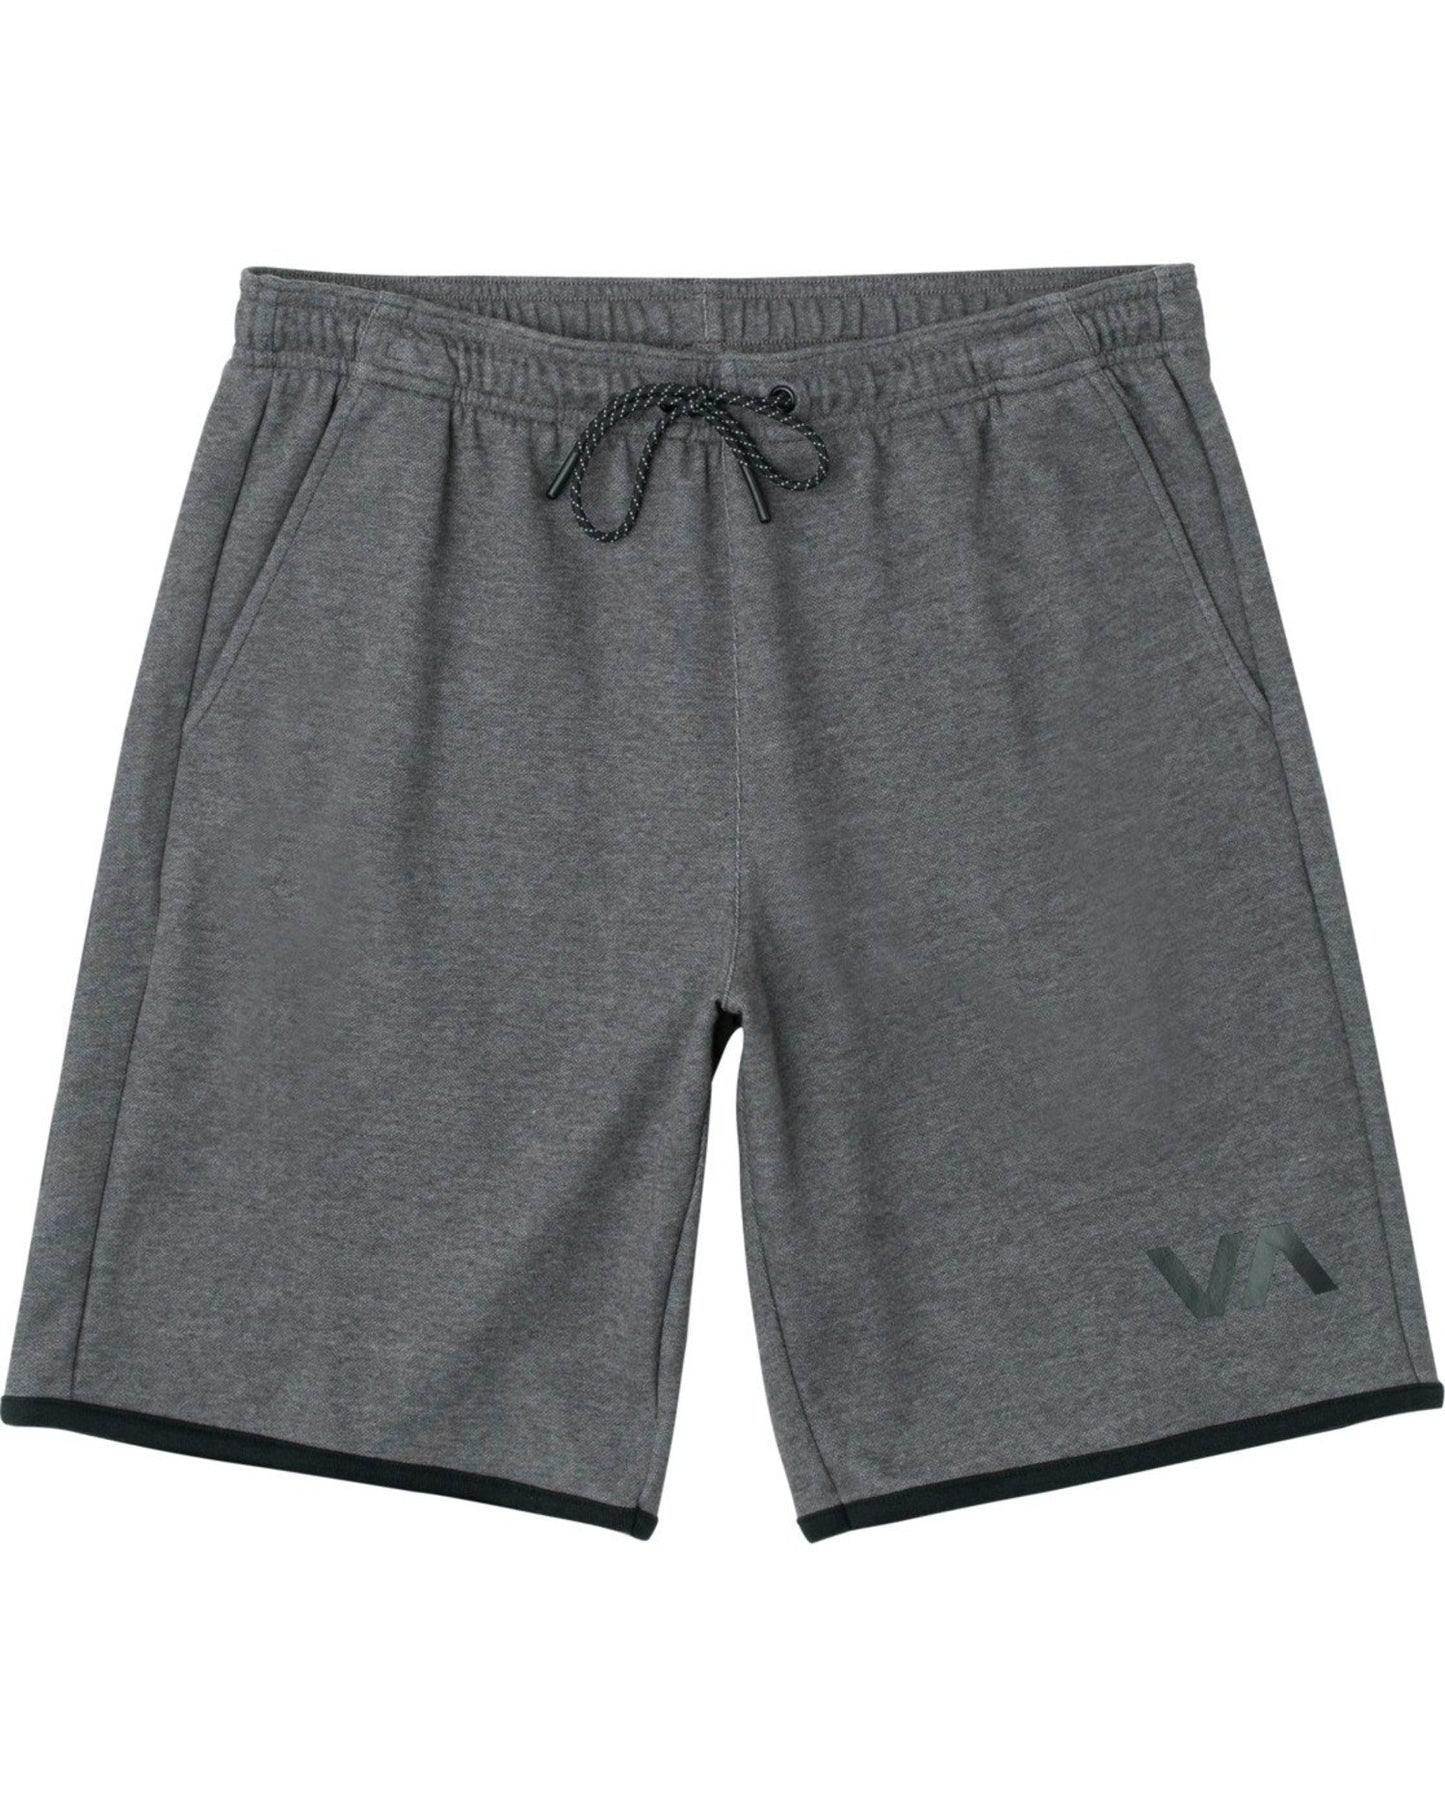 RVCA Boys VA Sport Short - Smoke Grey Heather Boys Shorts